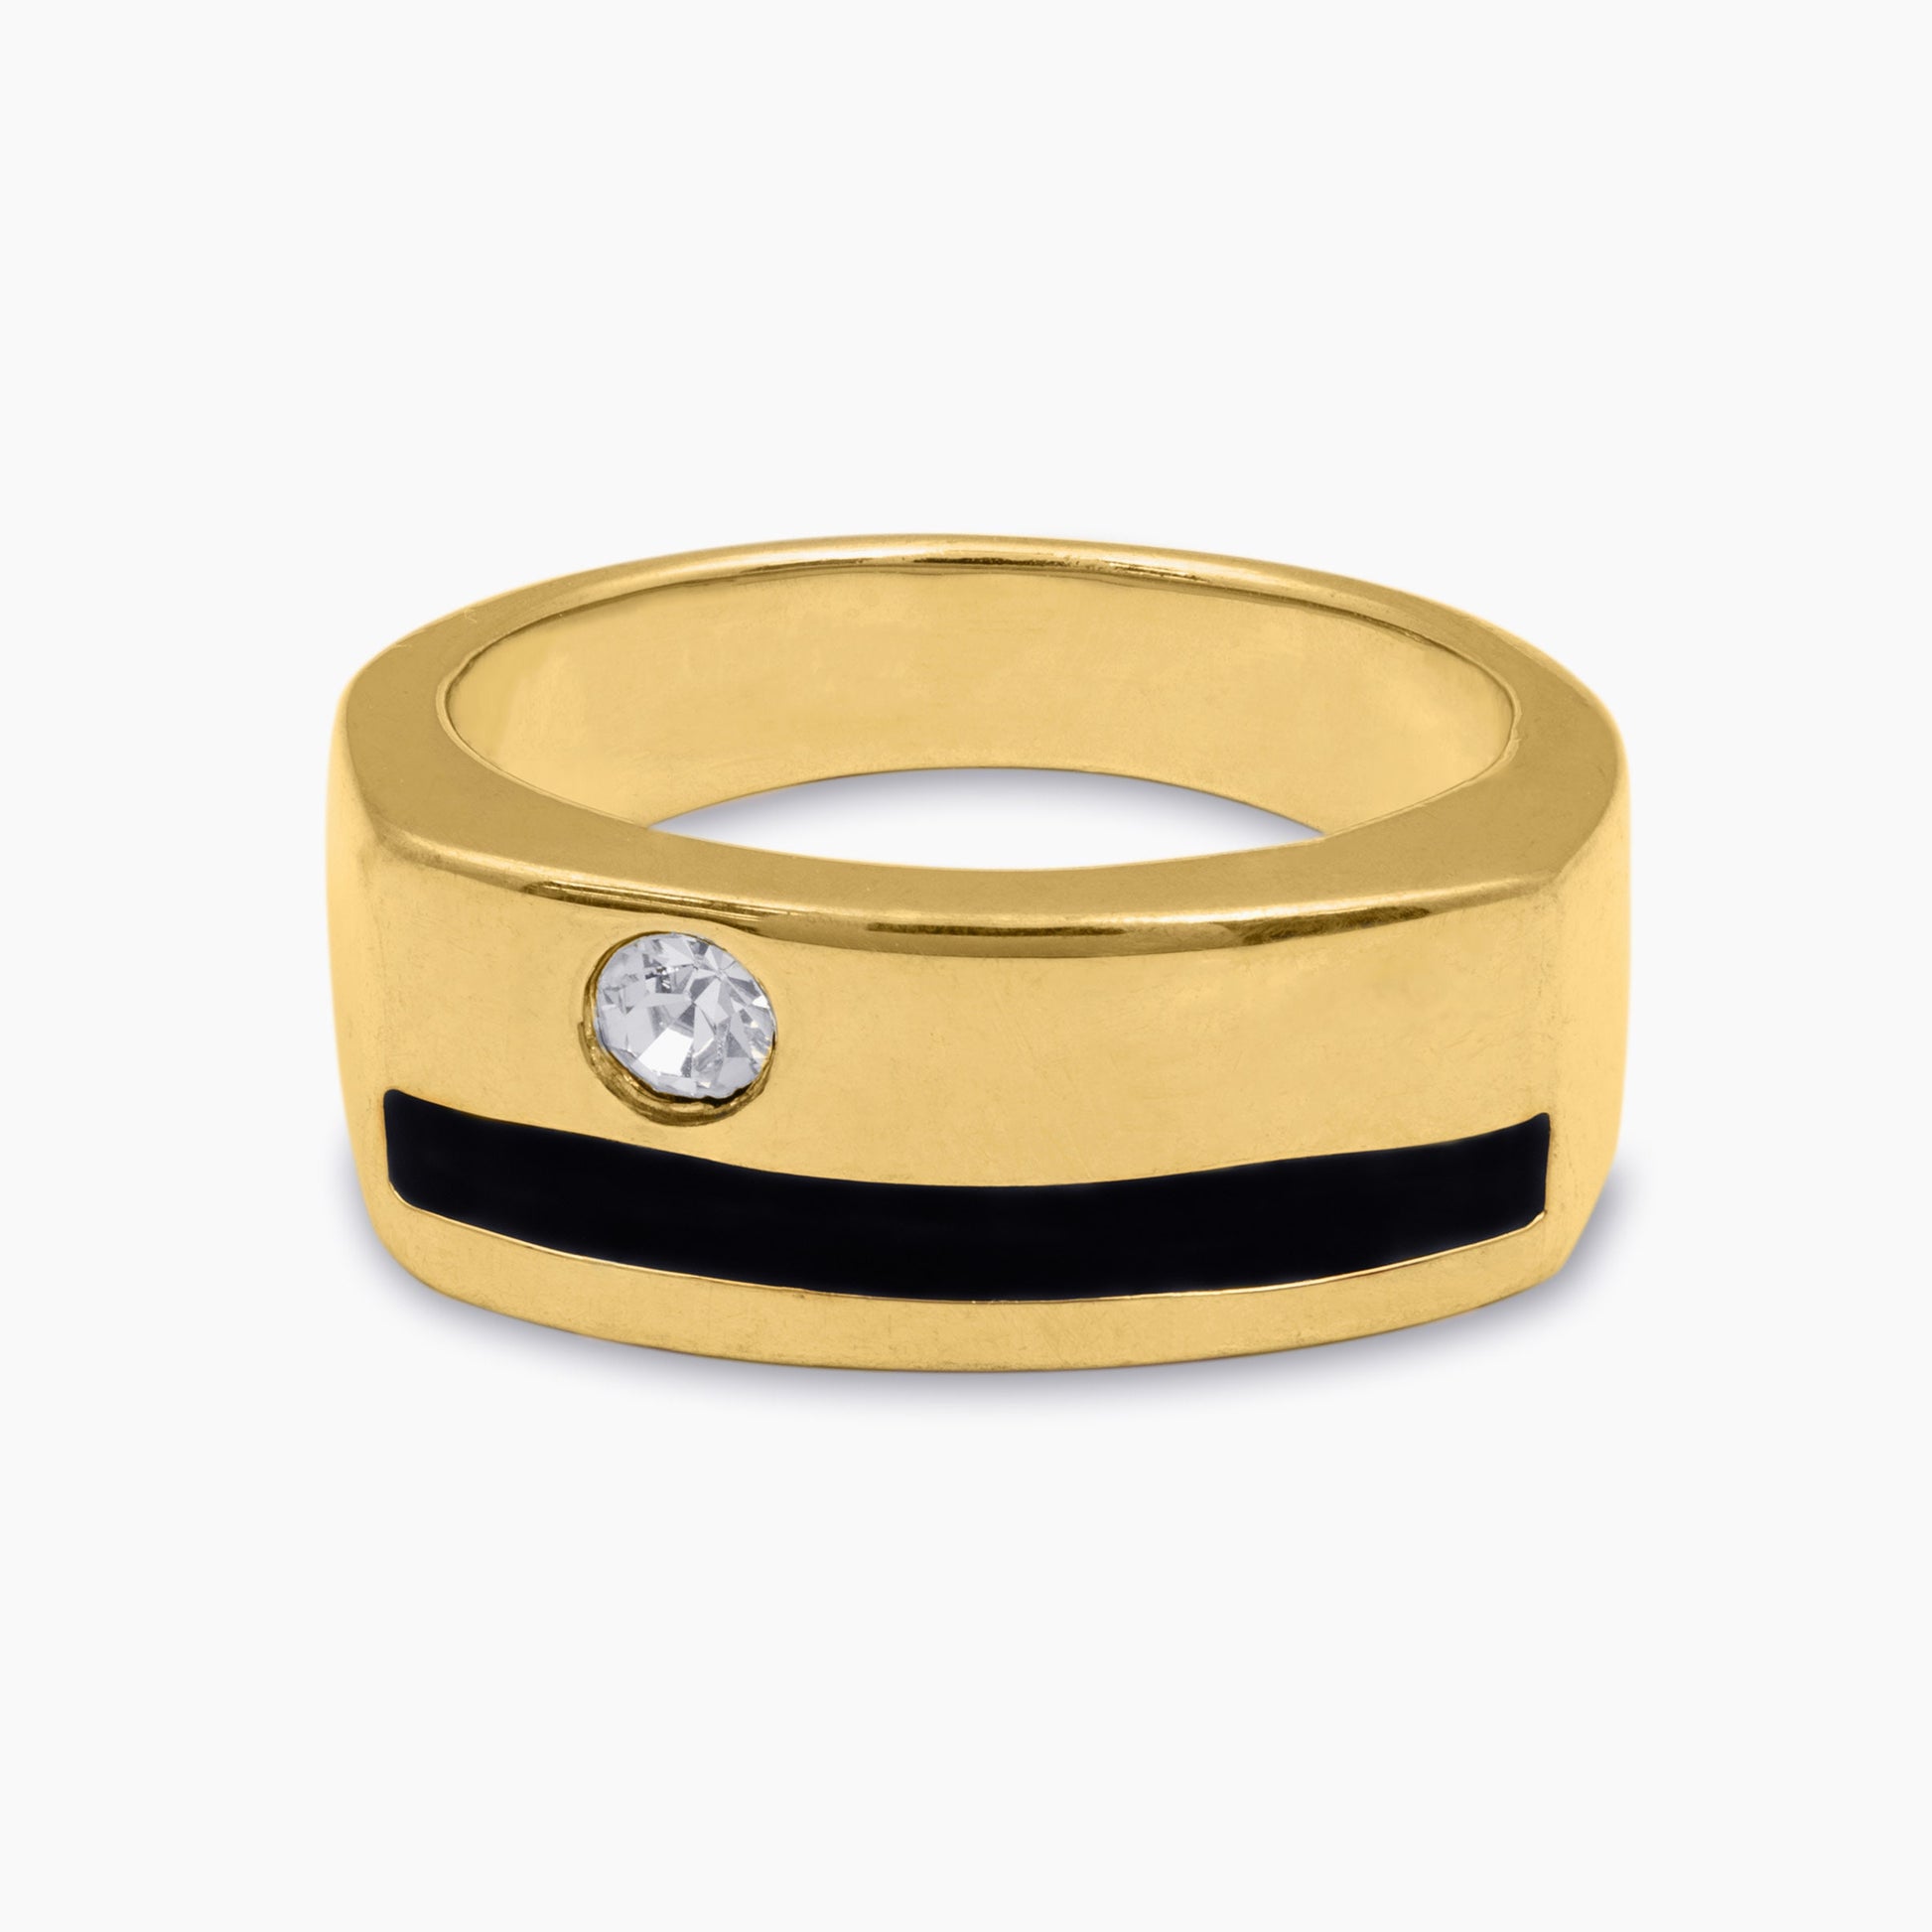 Vintage Ring 1980s Austrian Crystal with Black Enamel Detail 18kt Gold Plated Mens Signet Antique Ring #R6007